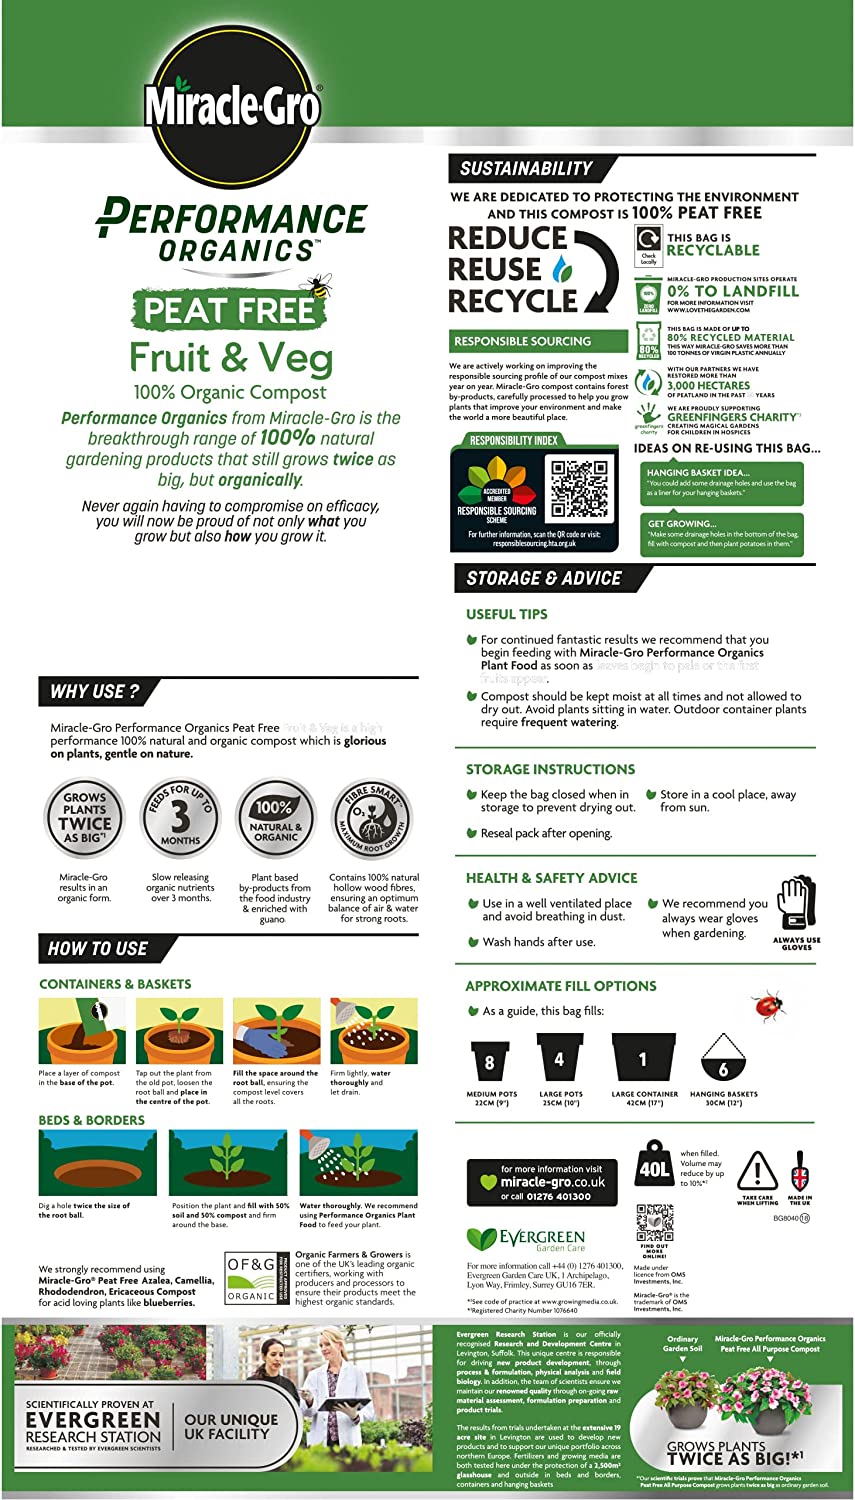 Miracle-Gro Performance Organics Fruit and Veg PEAT FREE Compost, 40L